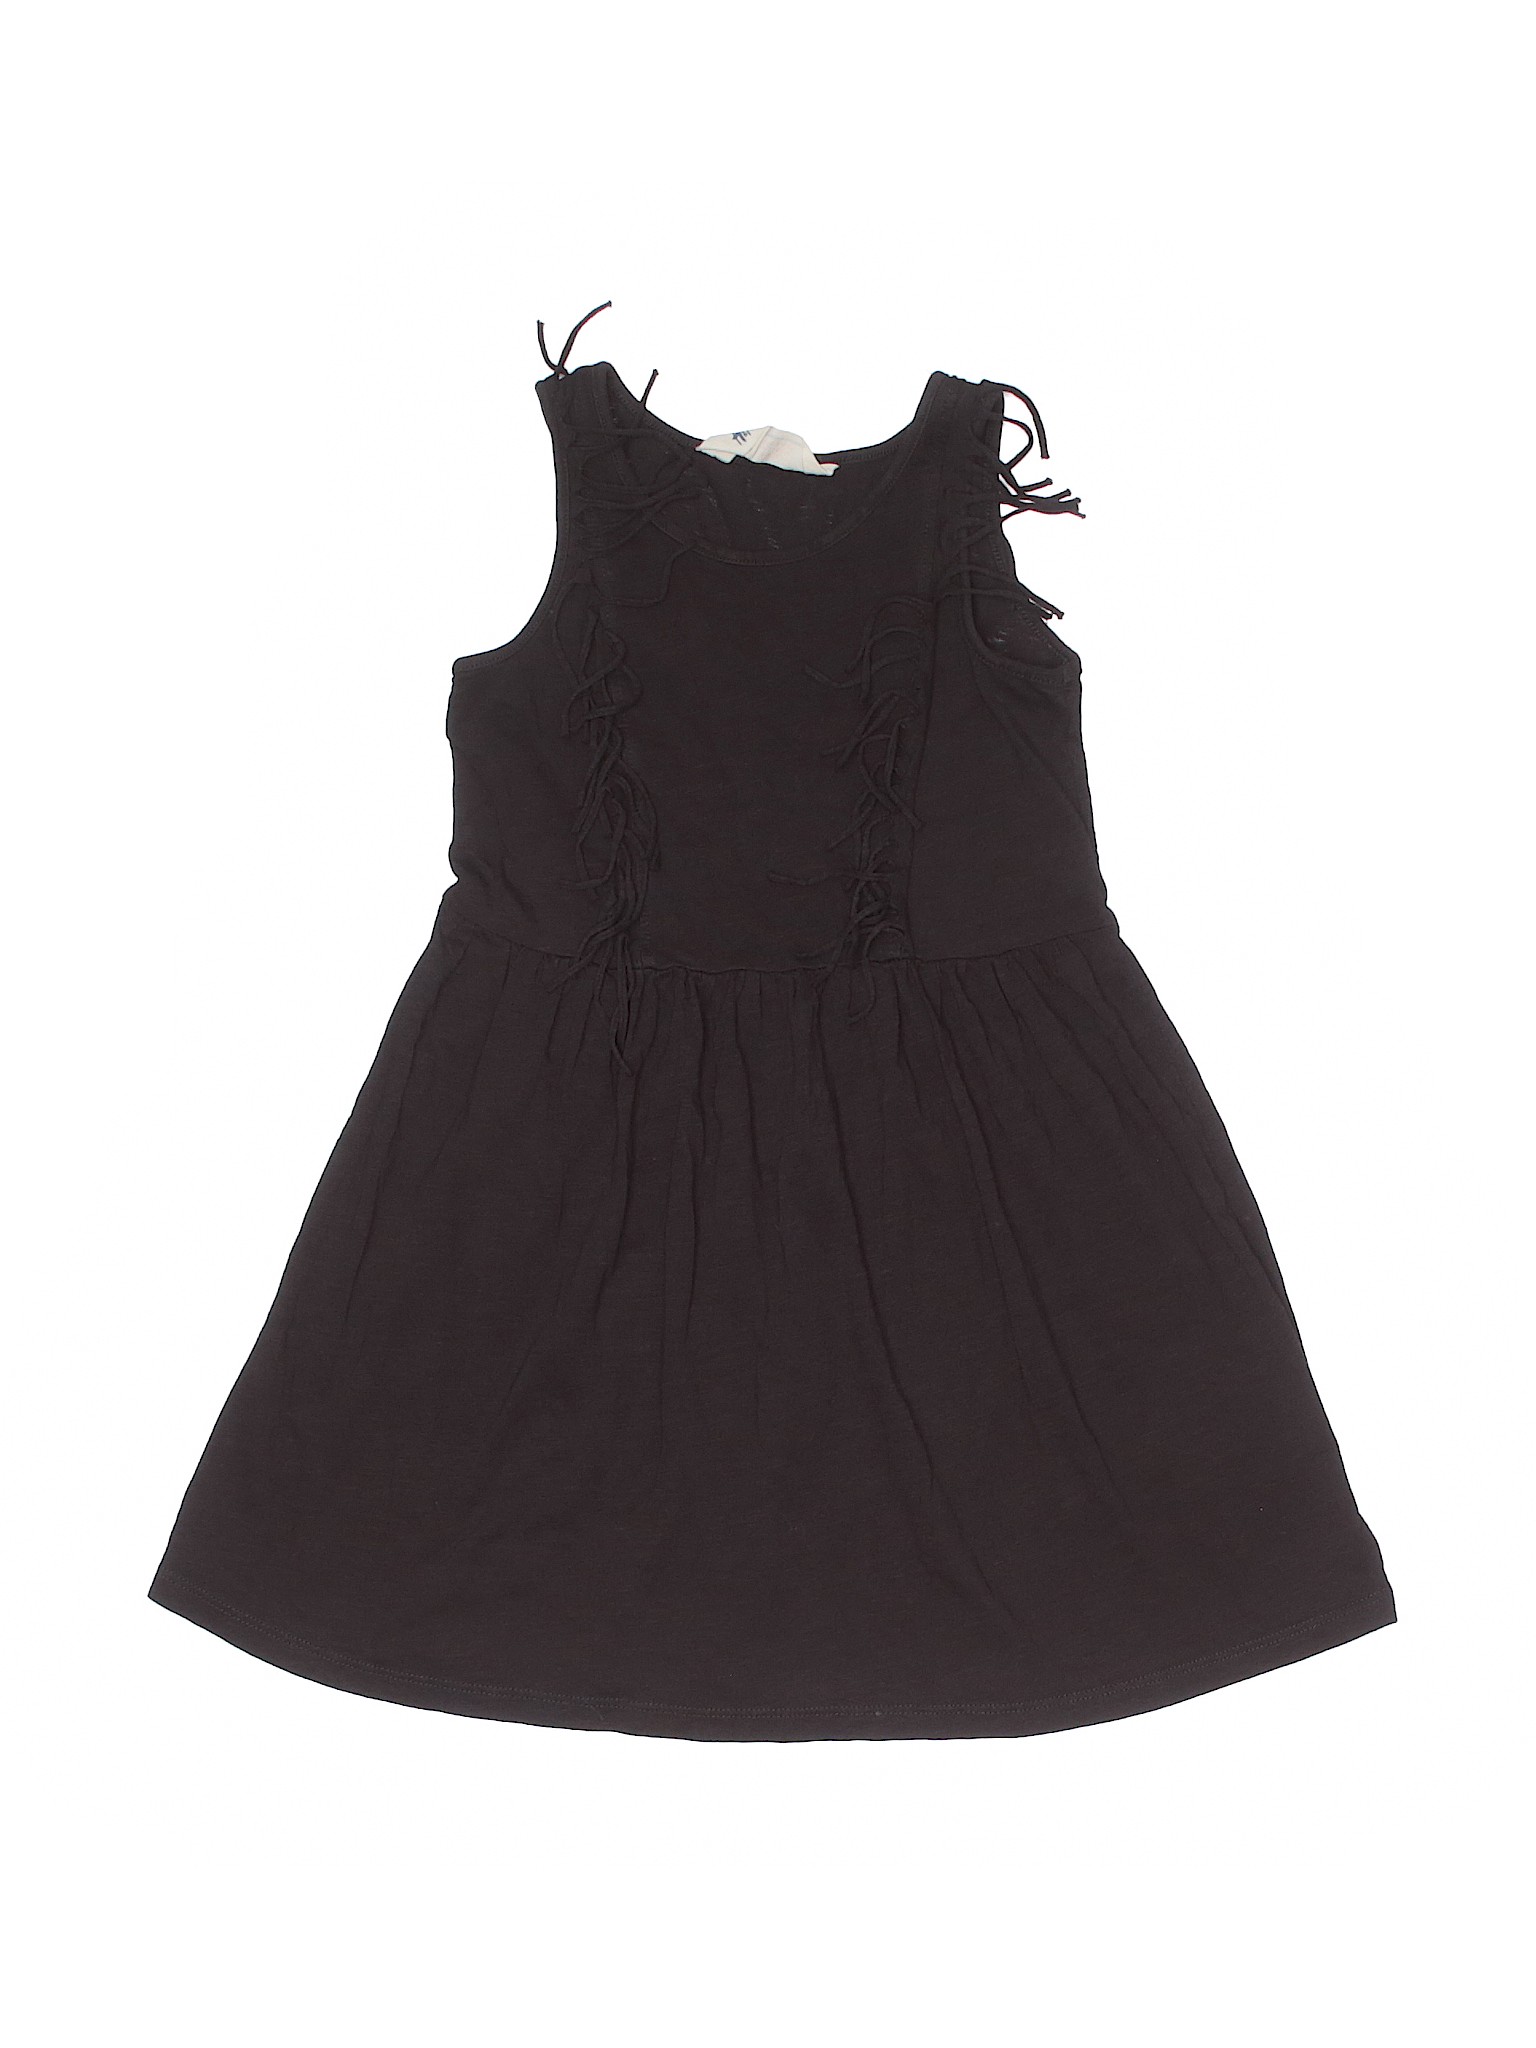 H&M Girls Black Dress 4 | eBay